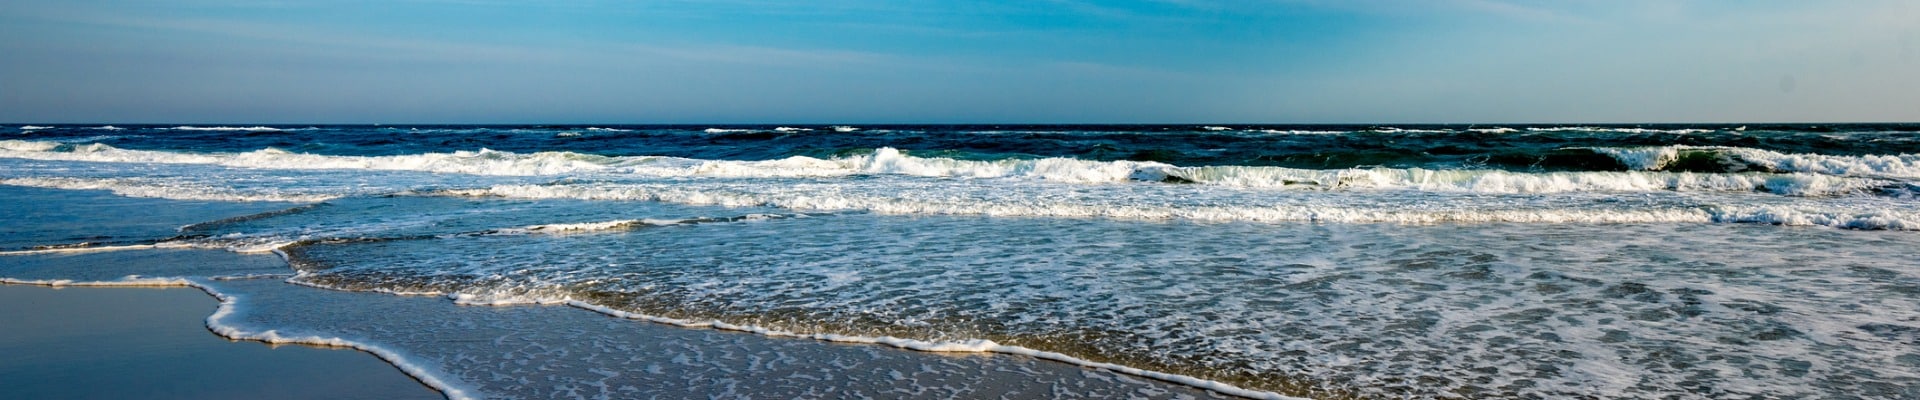 Ocean Beach Picture Id955260124 